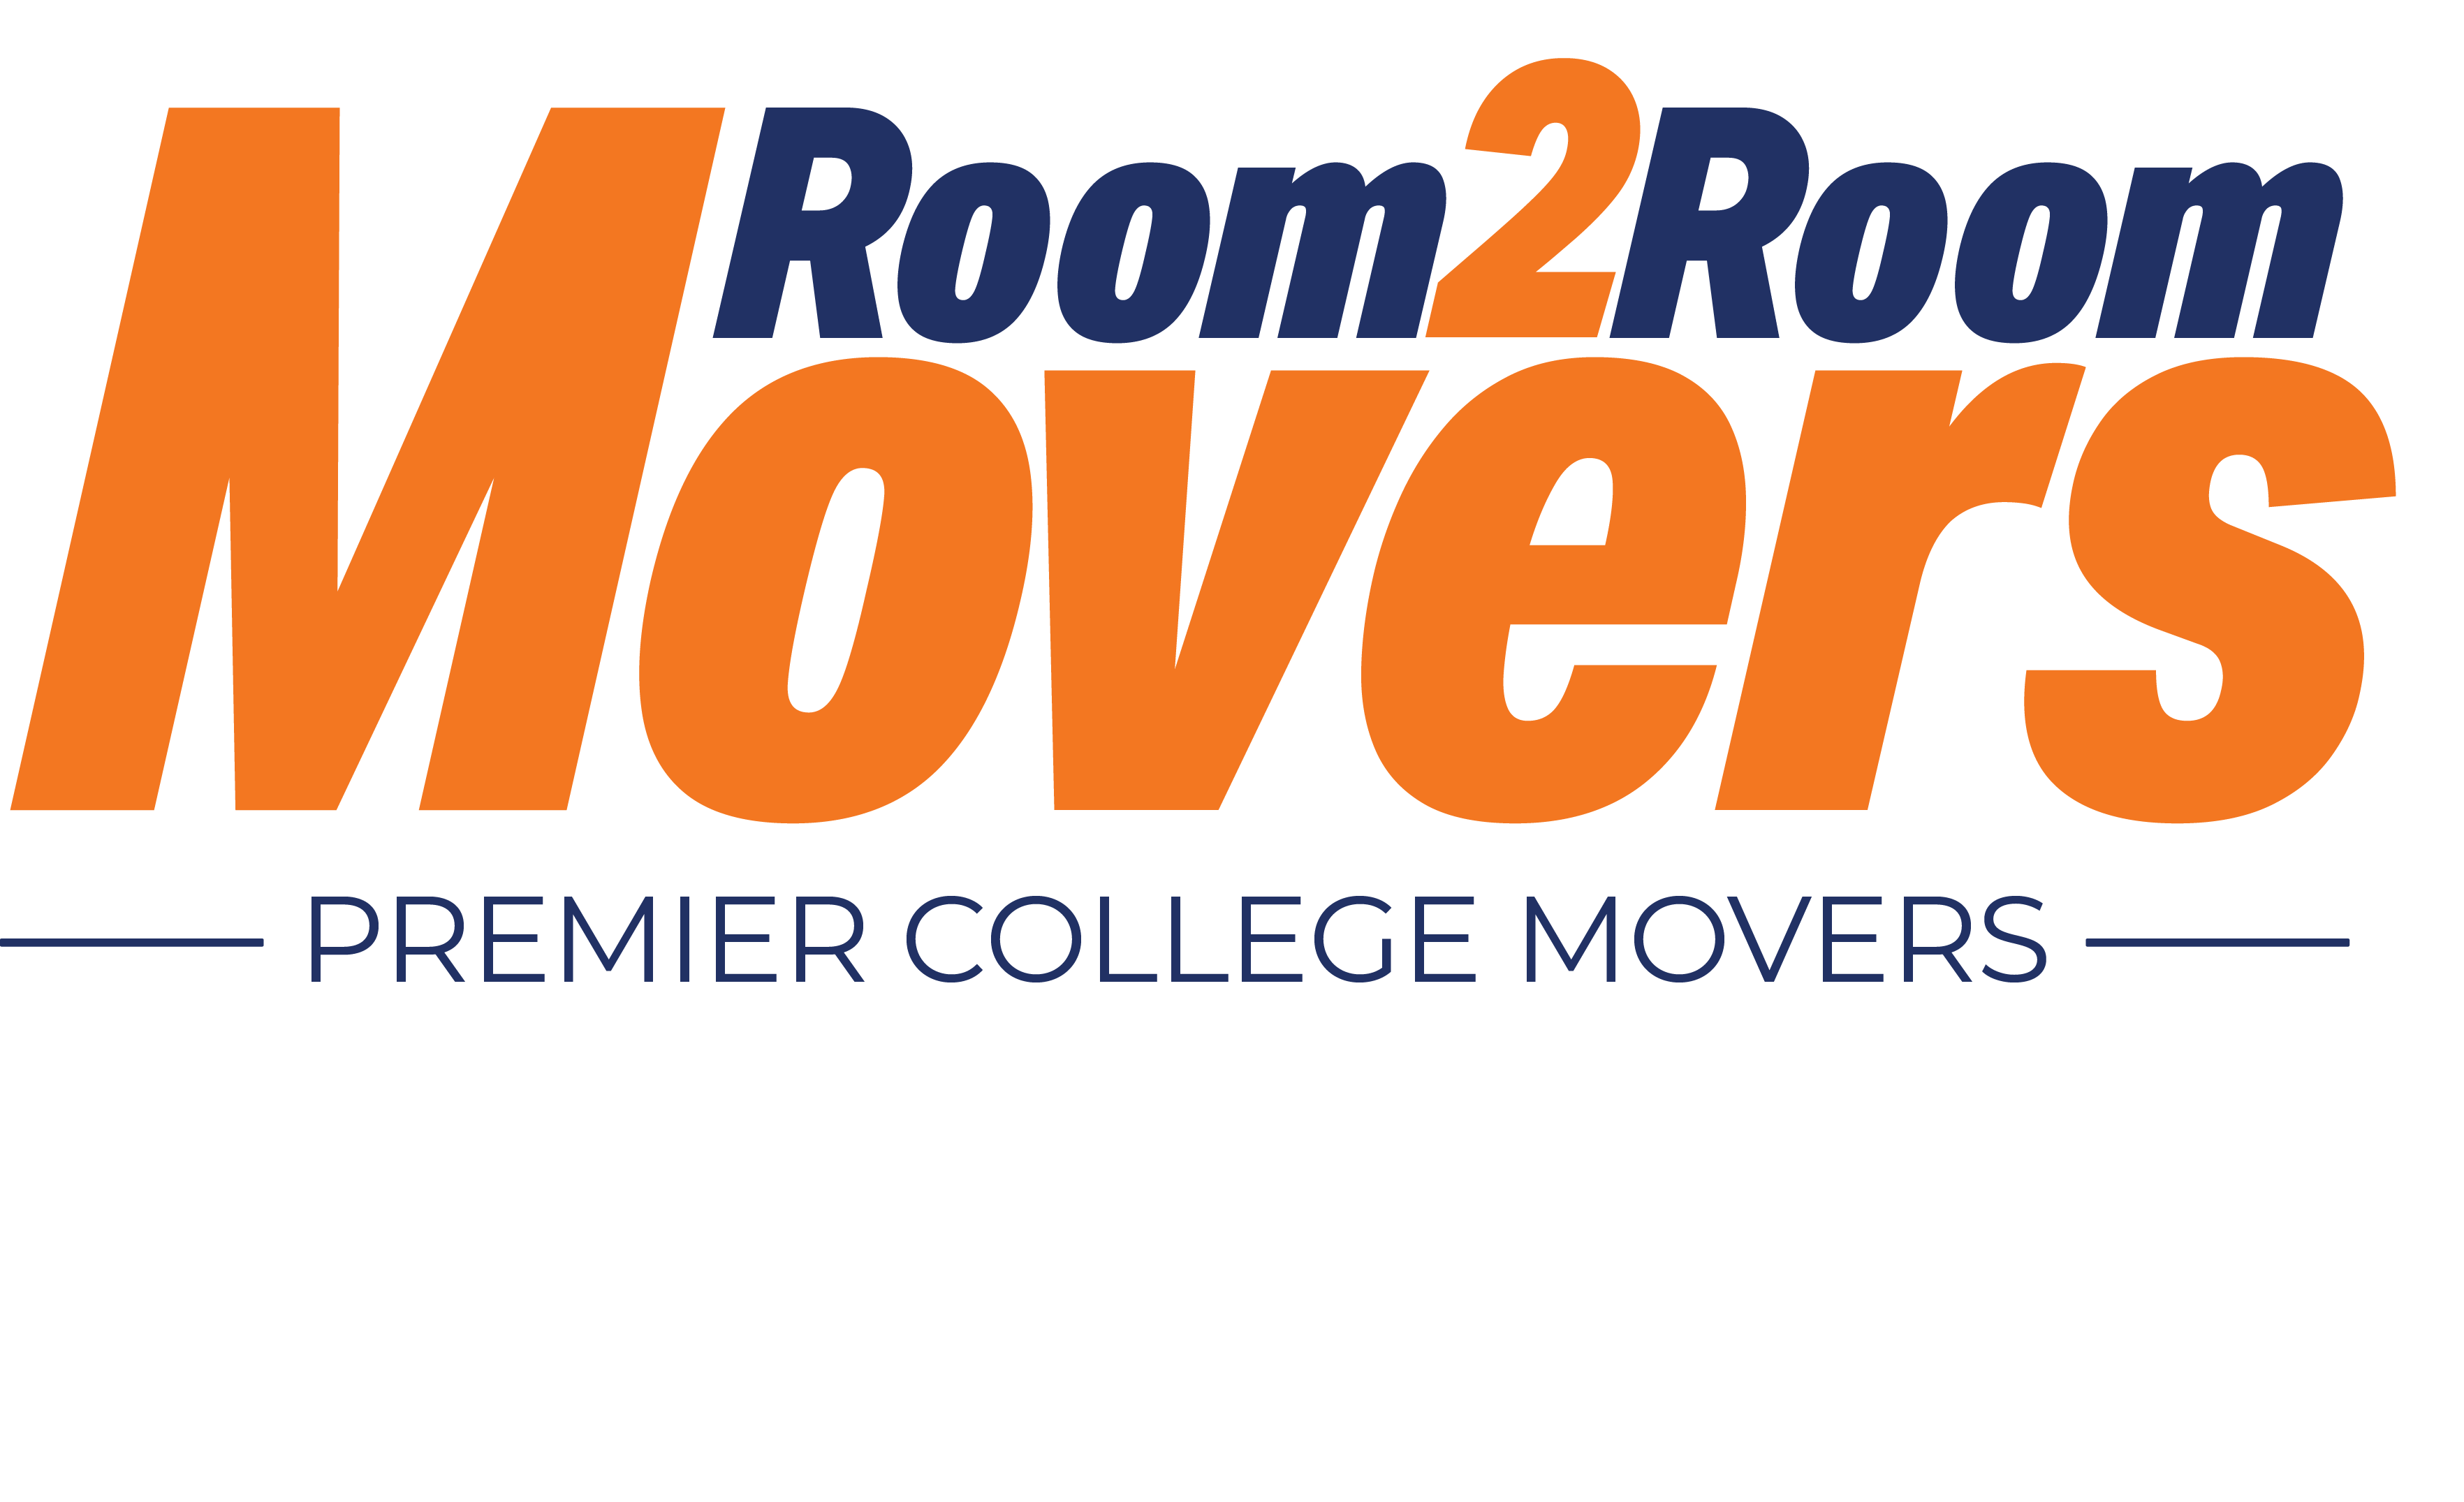 Room 2 Room Movers logo